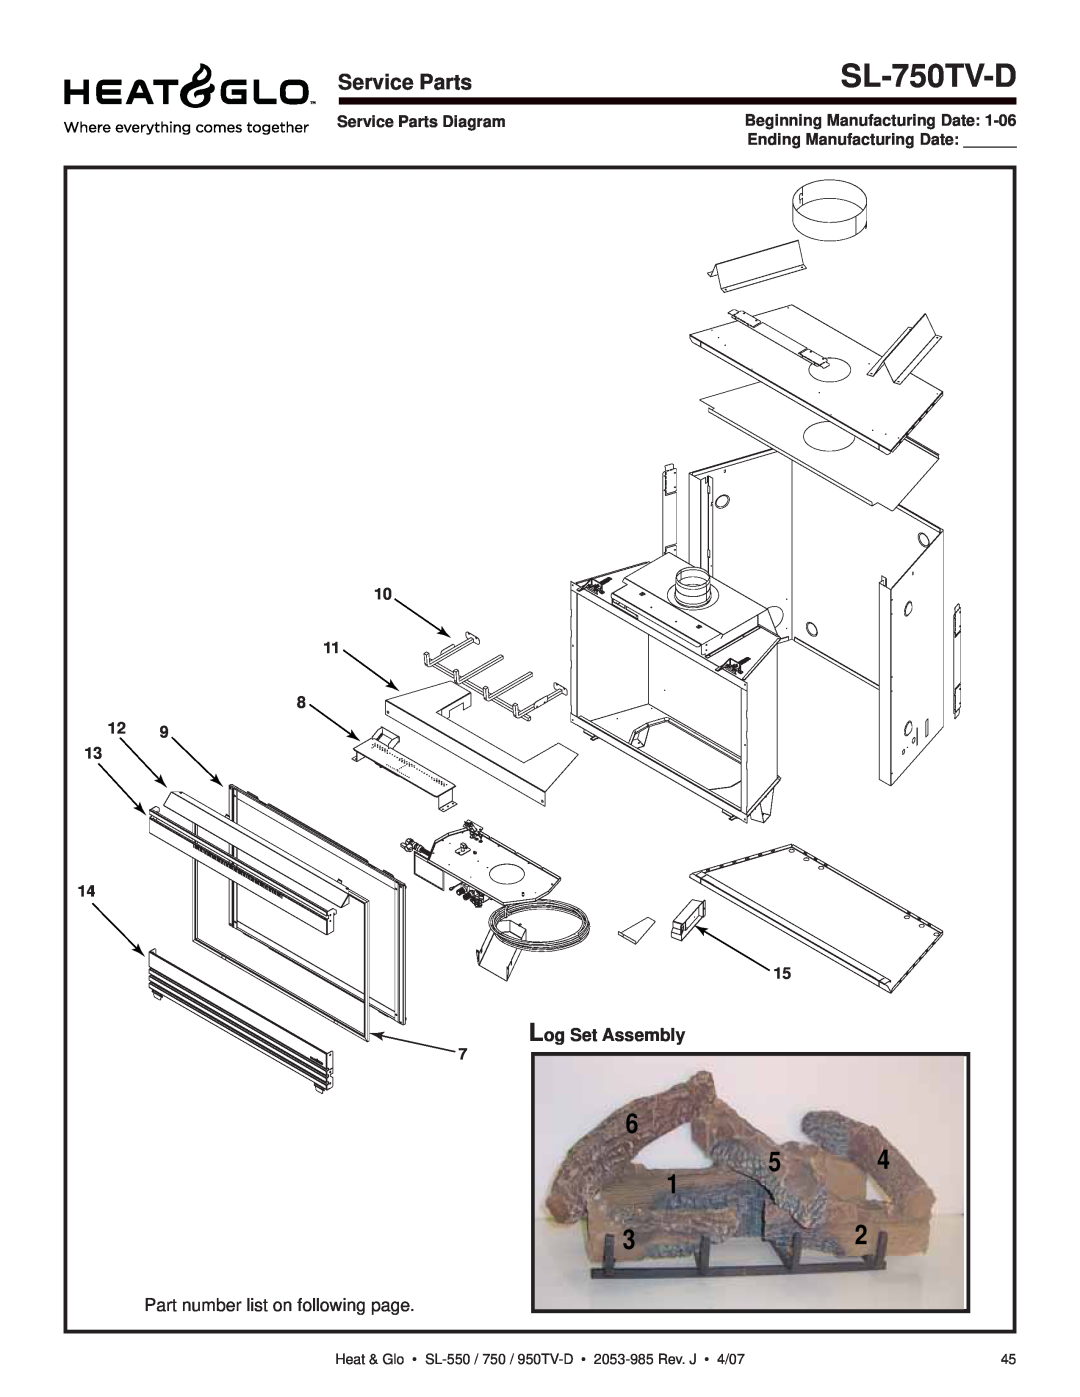 Heat & Glo LifeStyle SL-550TV-IPI-D SL-750TV-D, Log Set Assembly, Service Parts Diagram, Beginning Manufacturing Date 